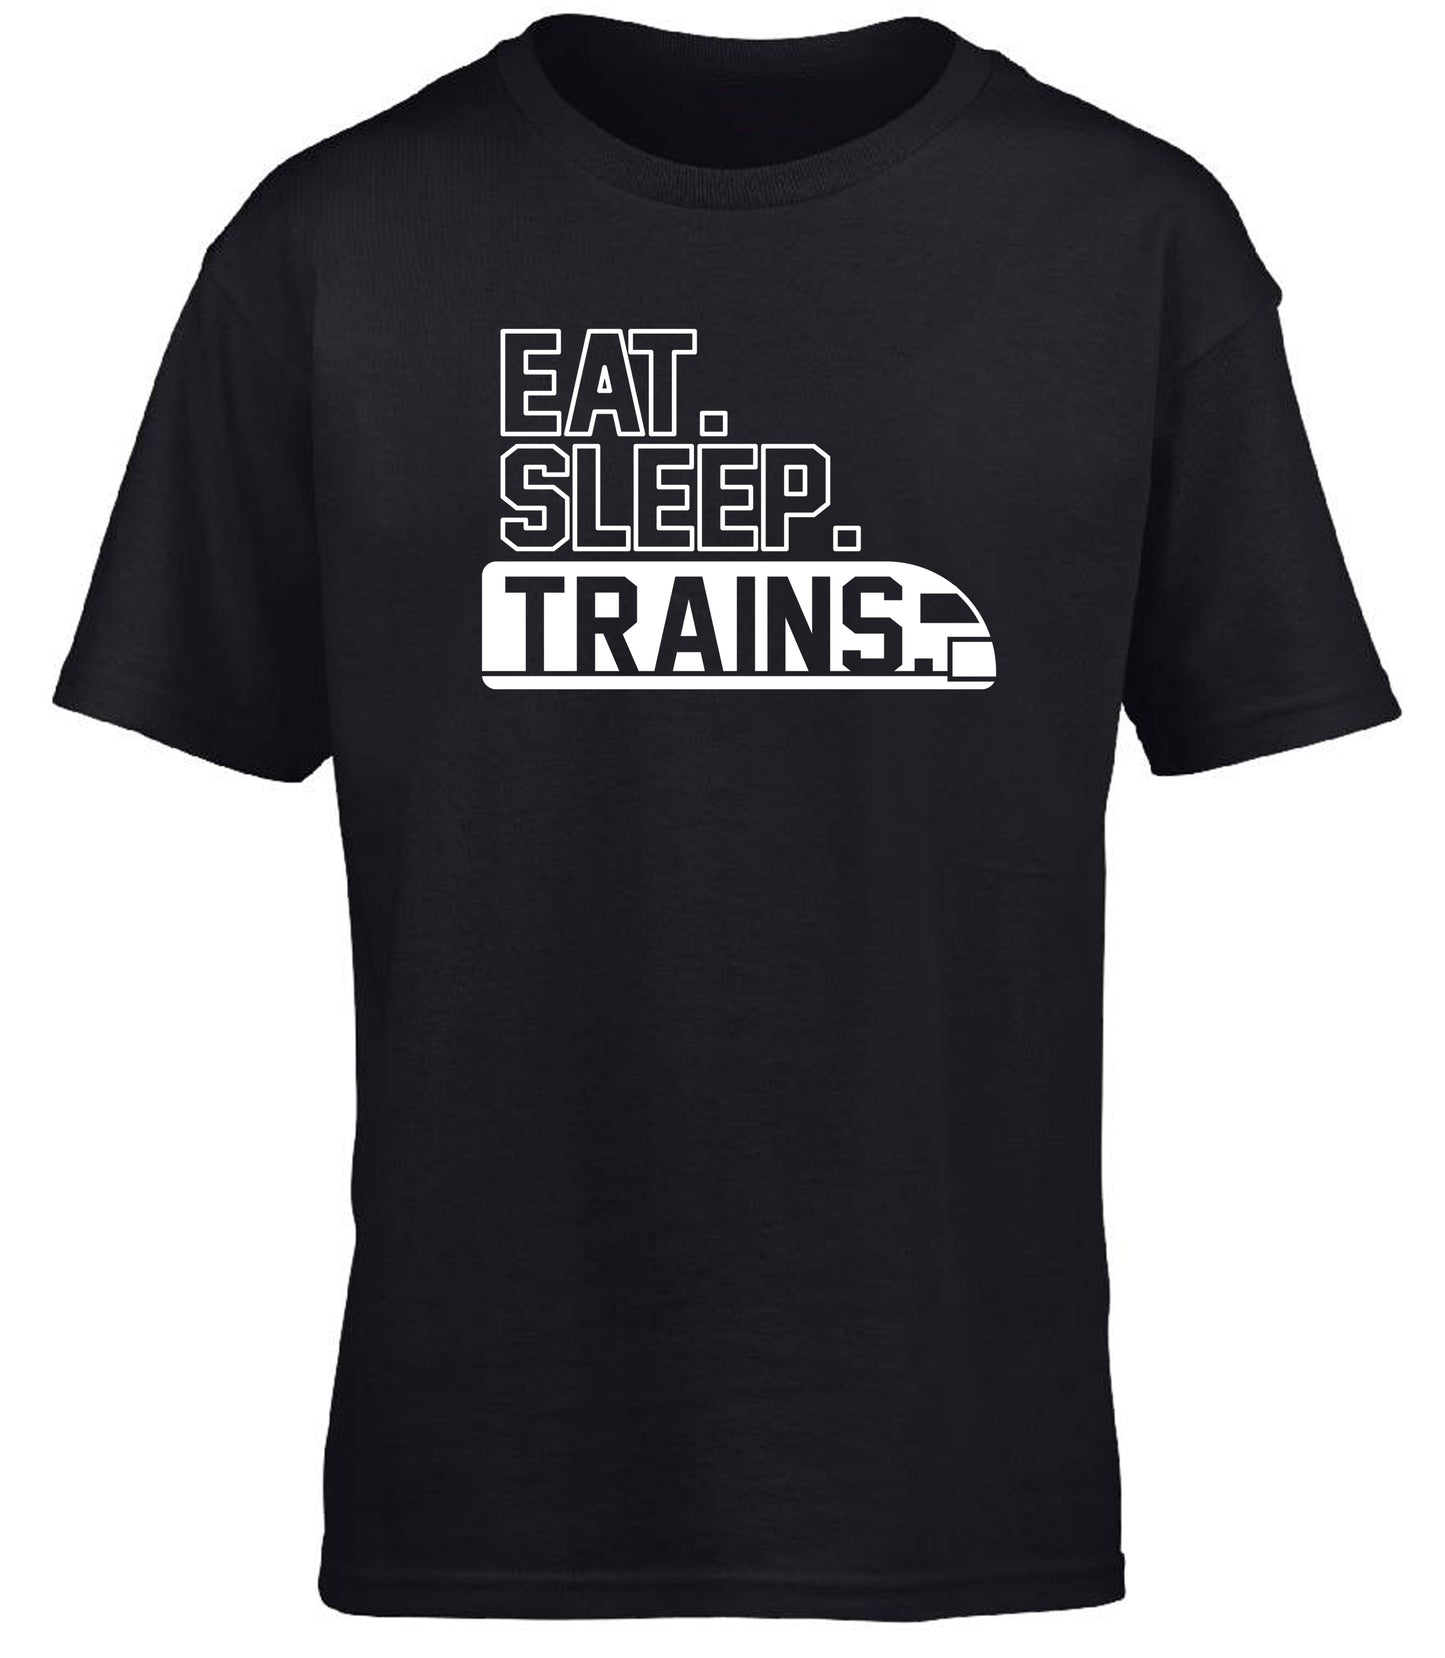 Eat Sleep Trains children's T-shirt